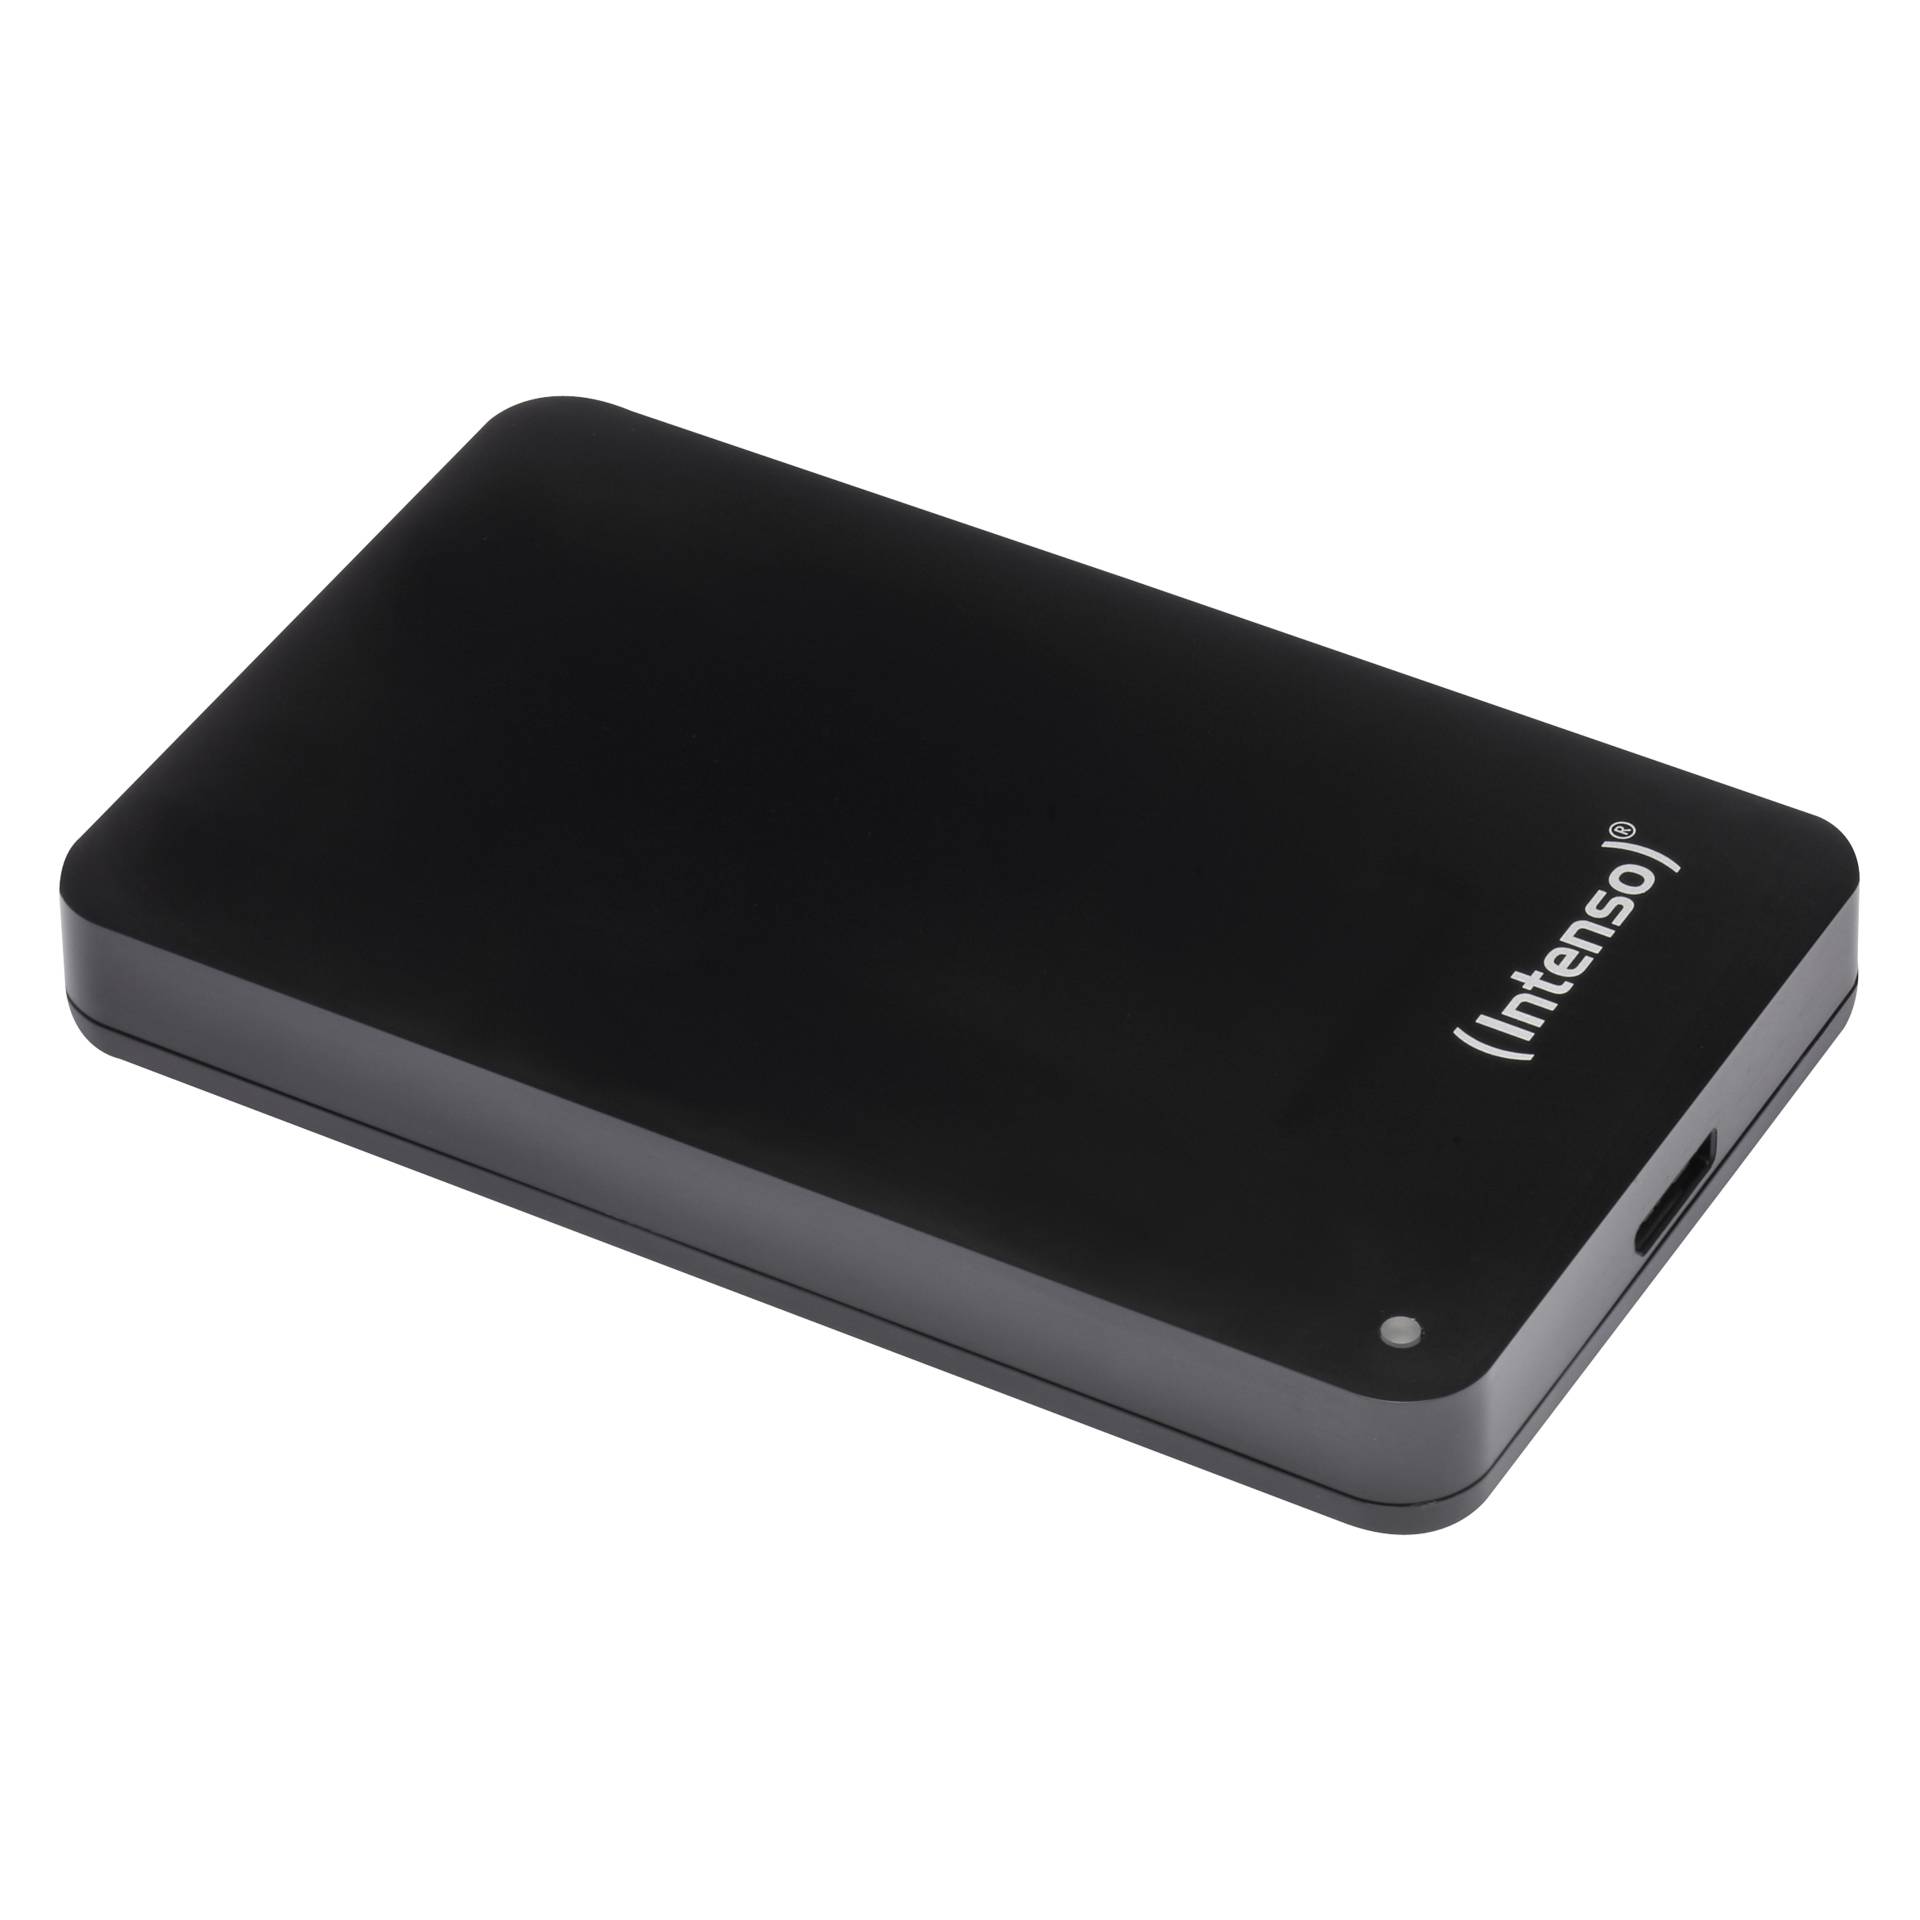 5.0 TB HDD Intenso Memory Case schwarz, USB 3.0 Micro-B 